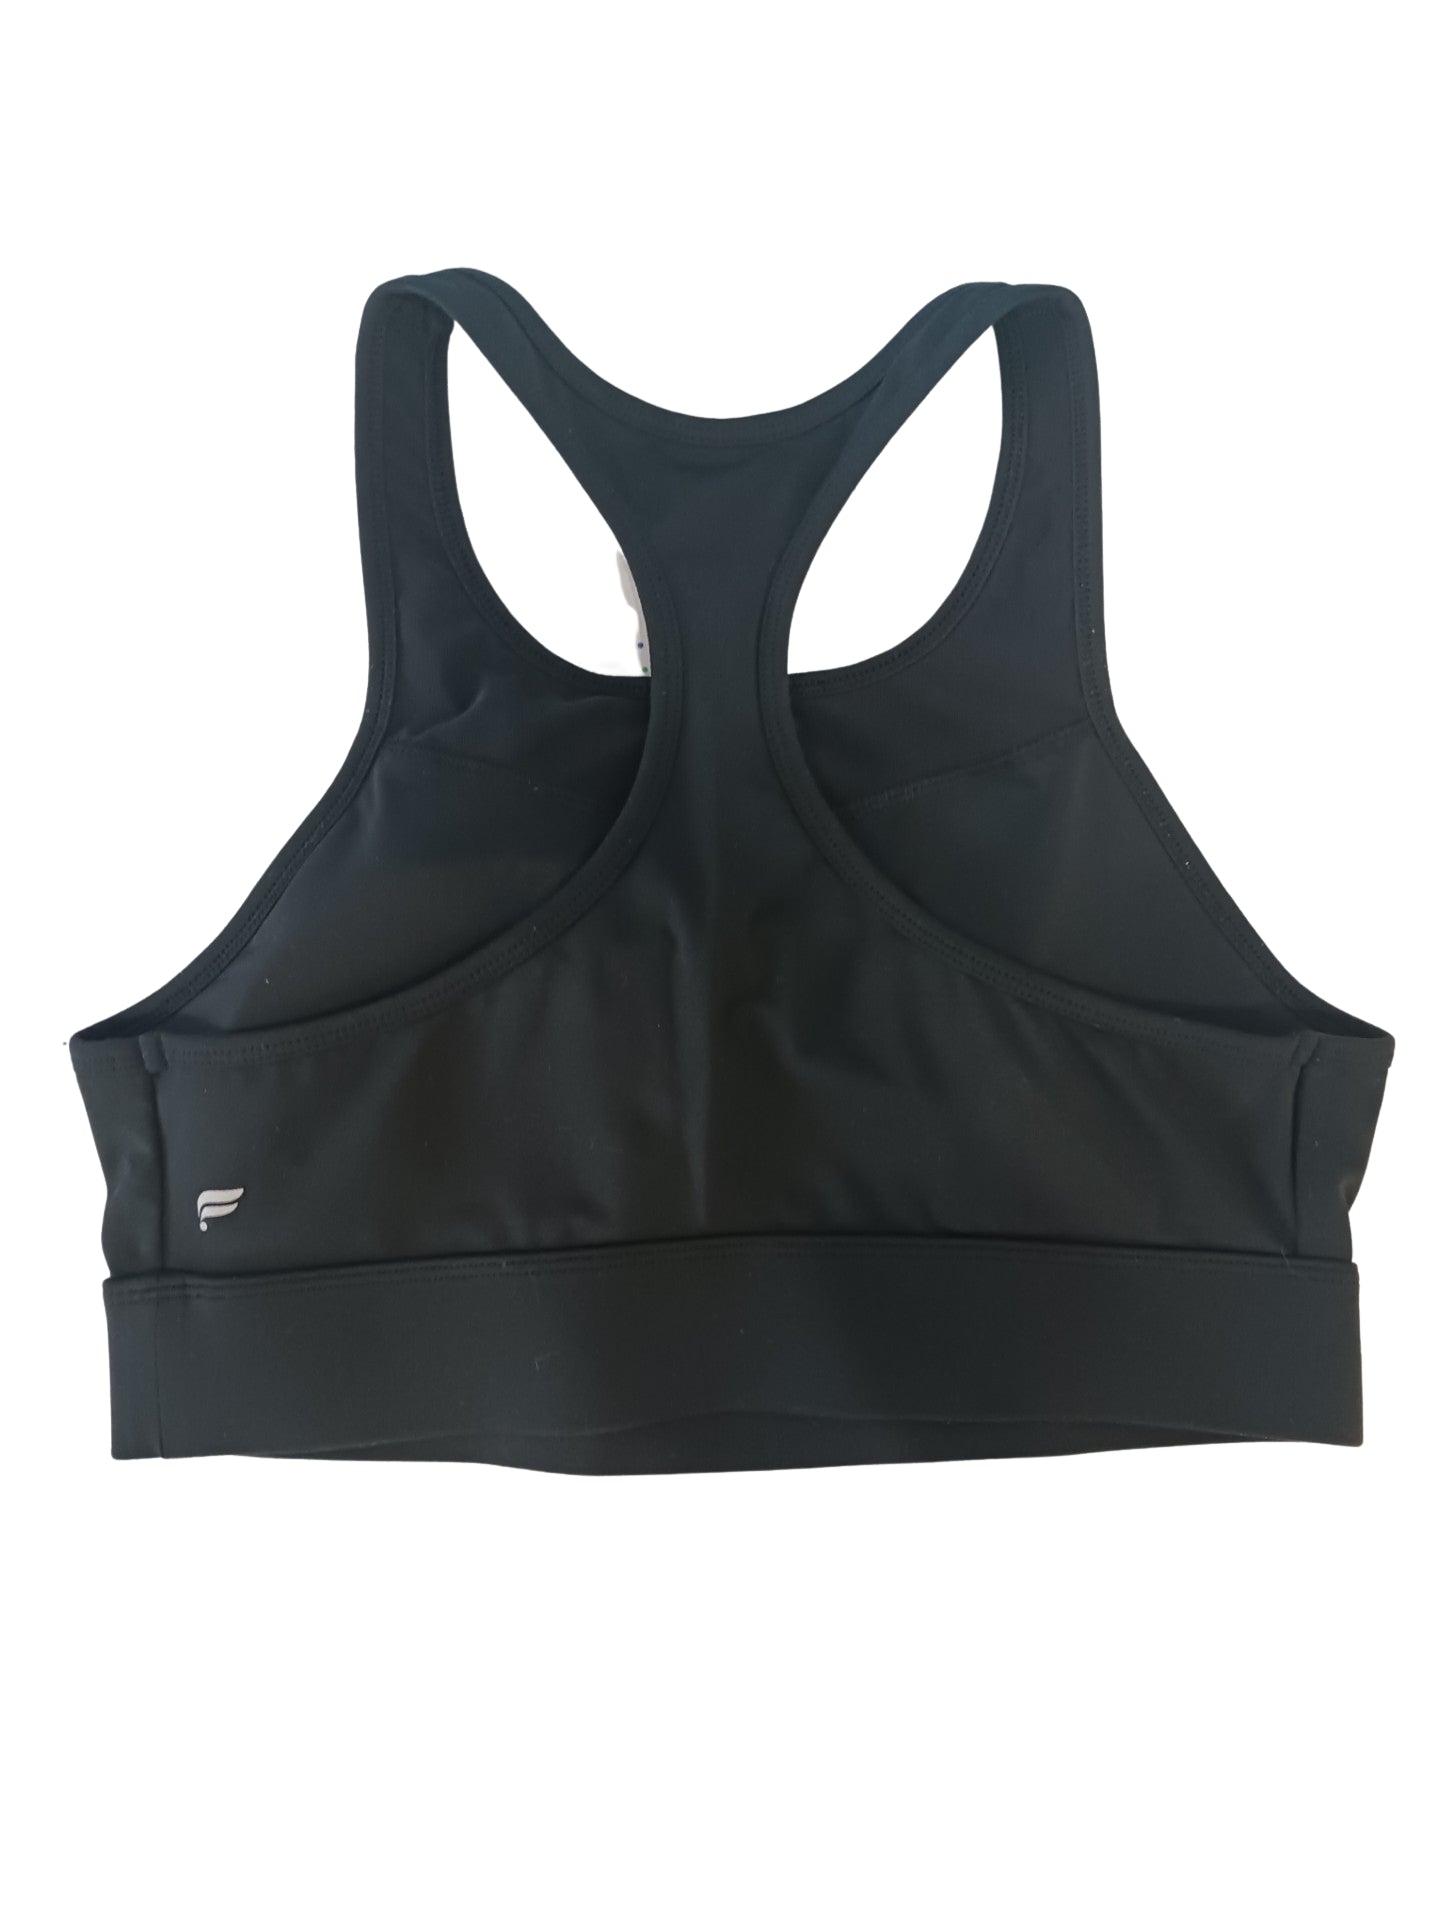 Fabletics Black Lace-Front Sports Bra, Size XL